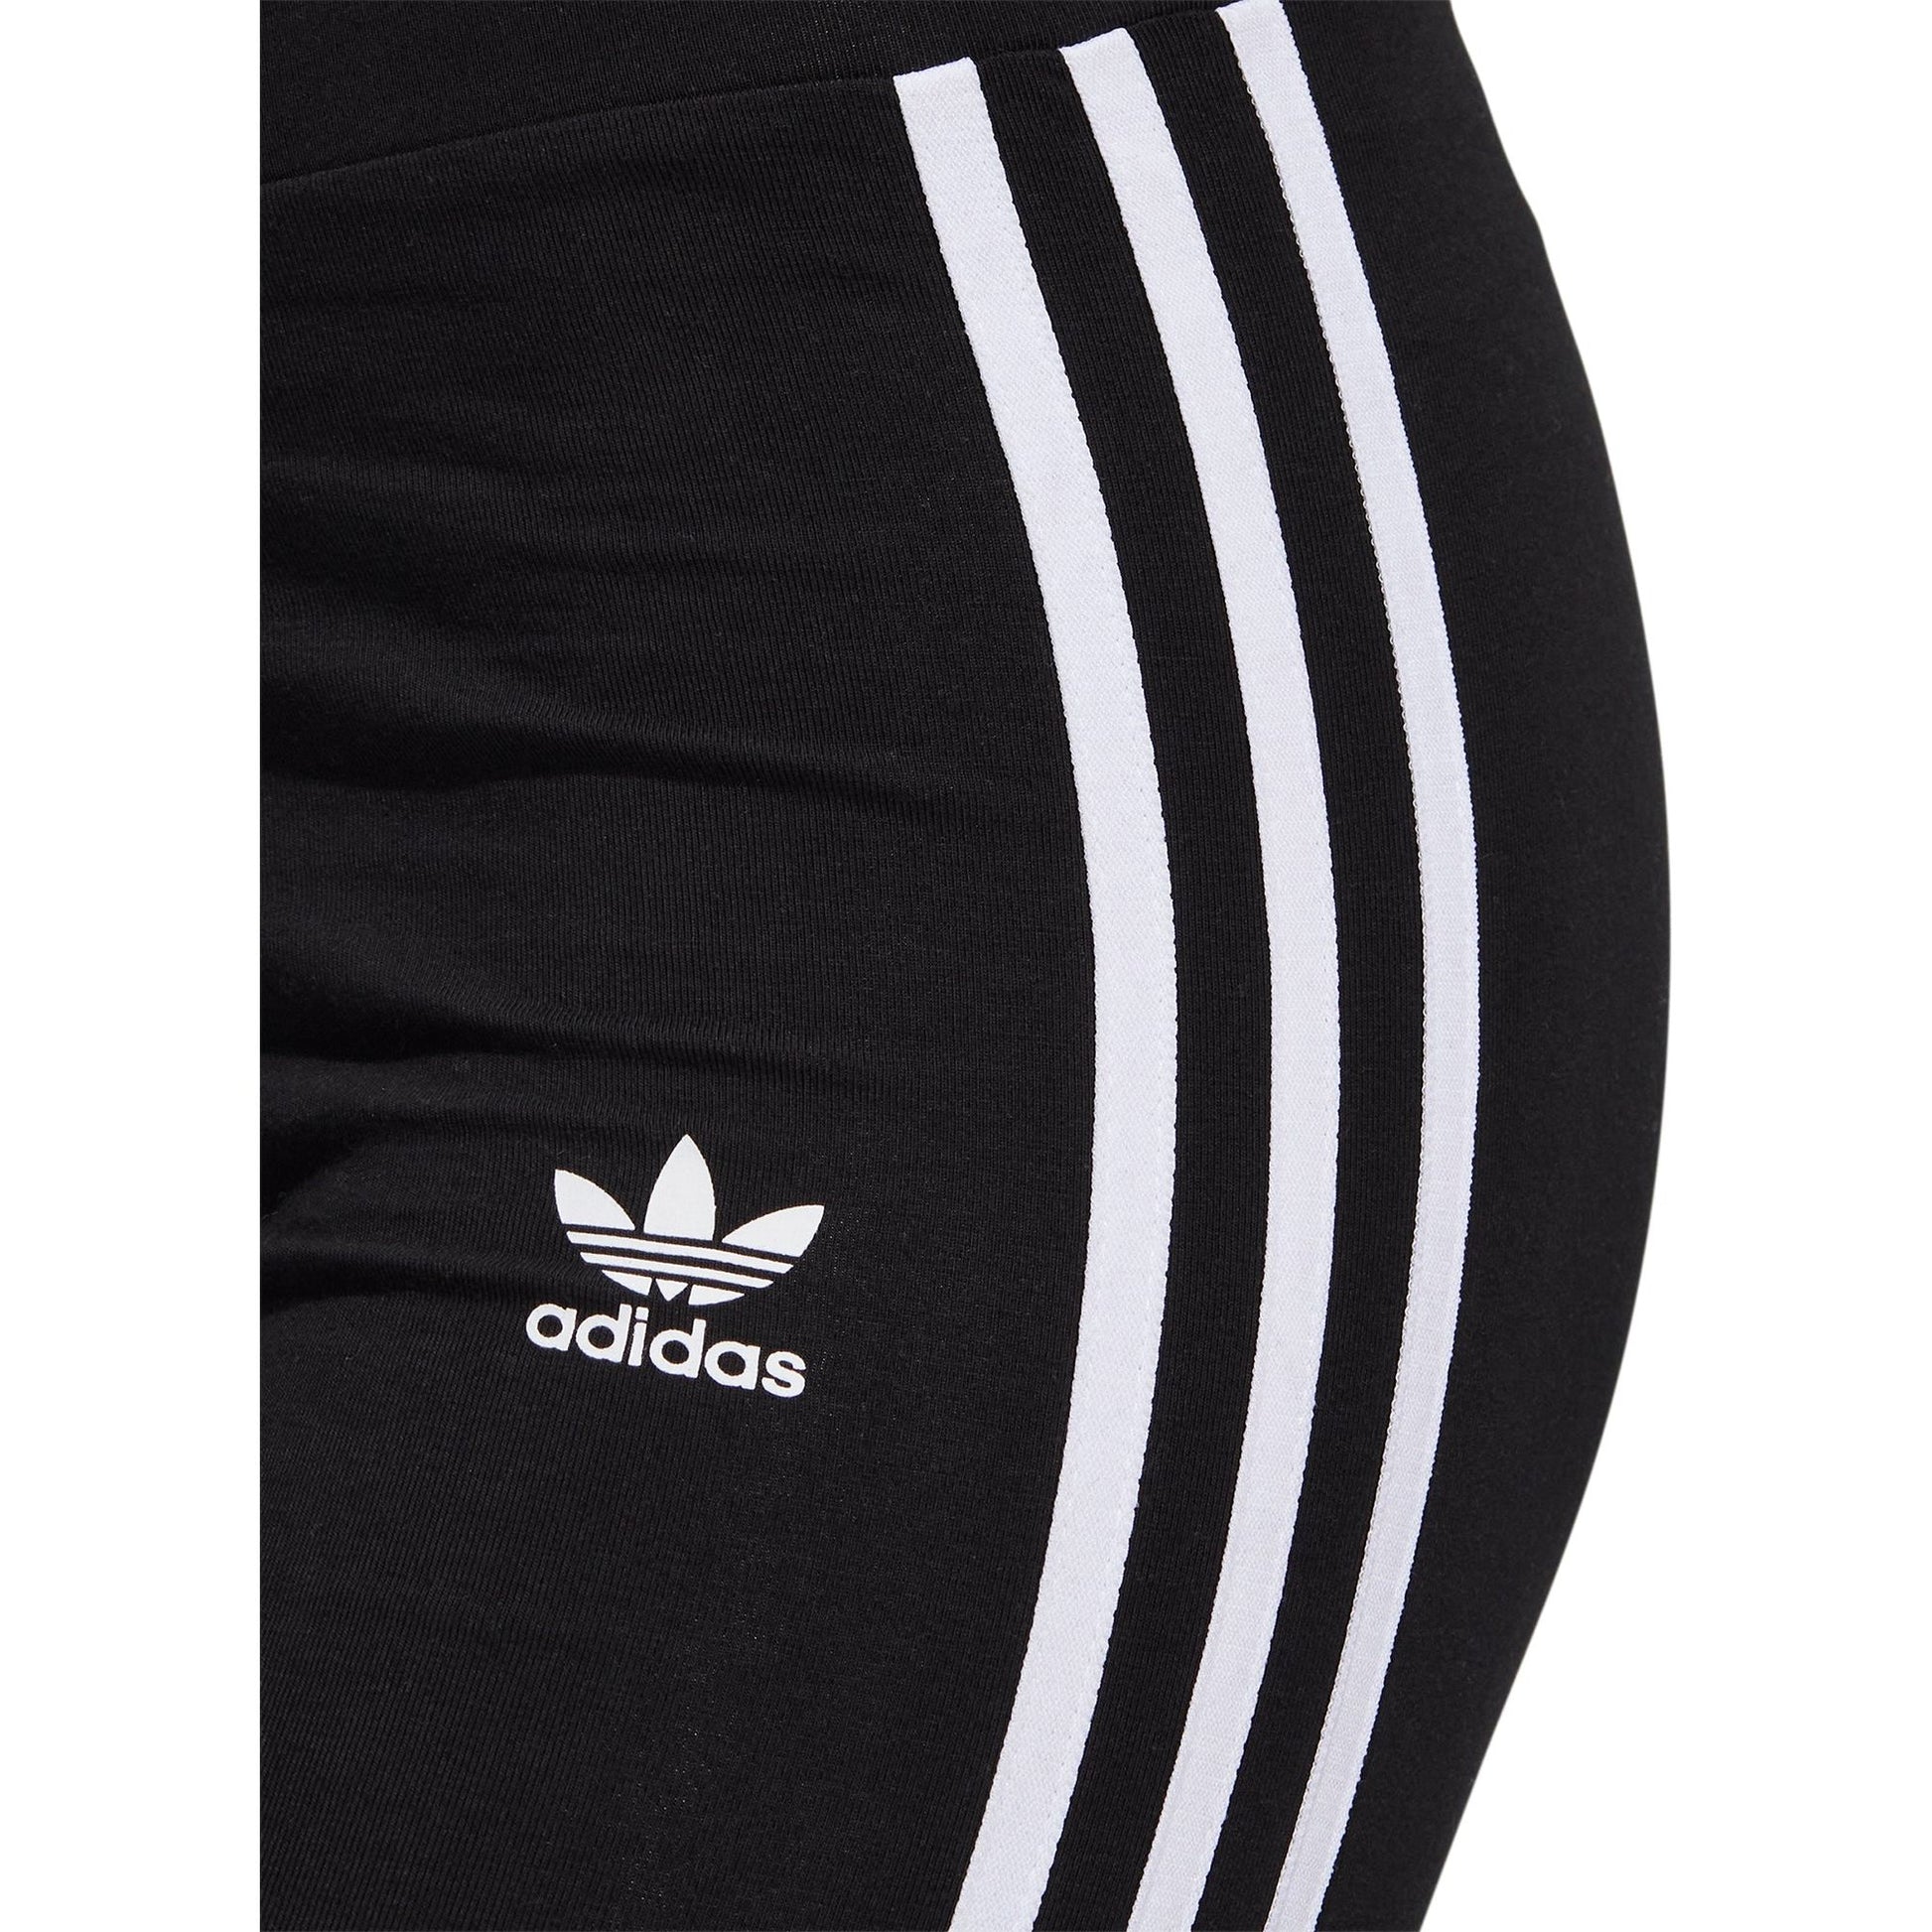 Adidas Stripes Long Tights Hd2350 Details